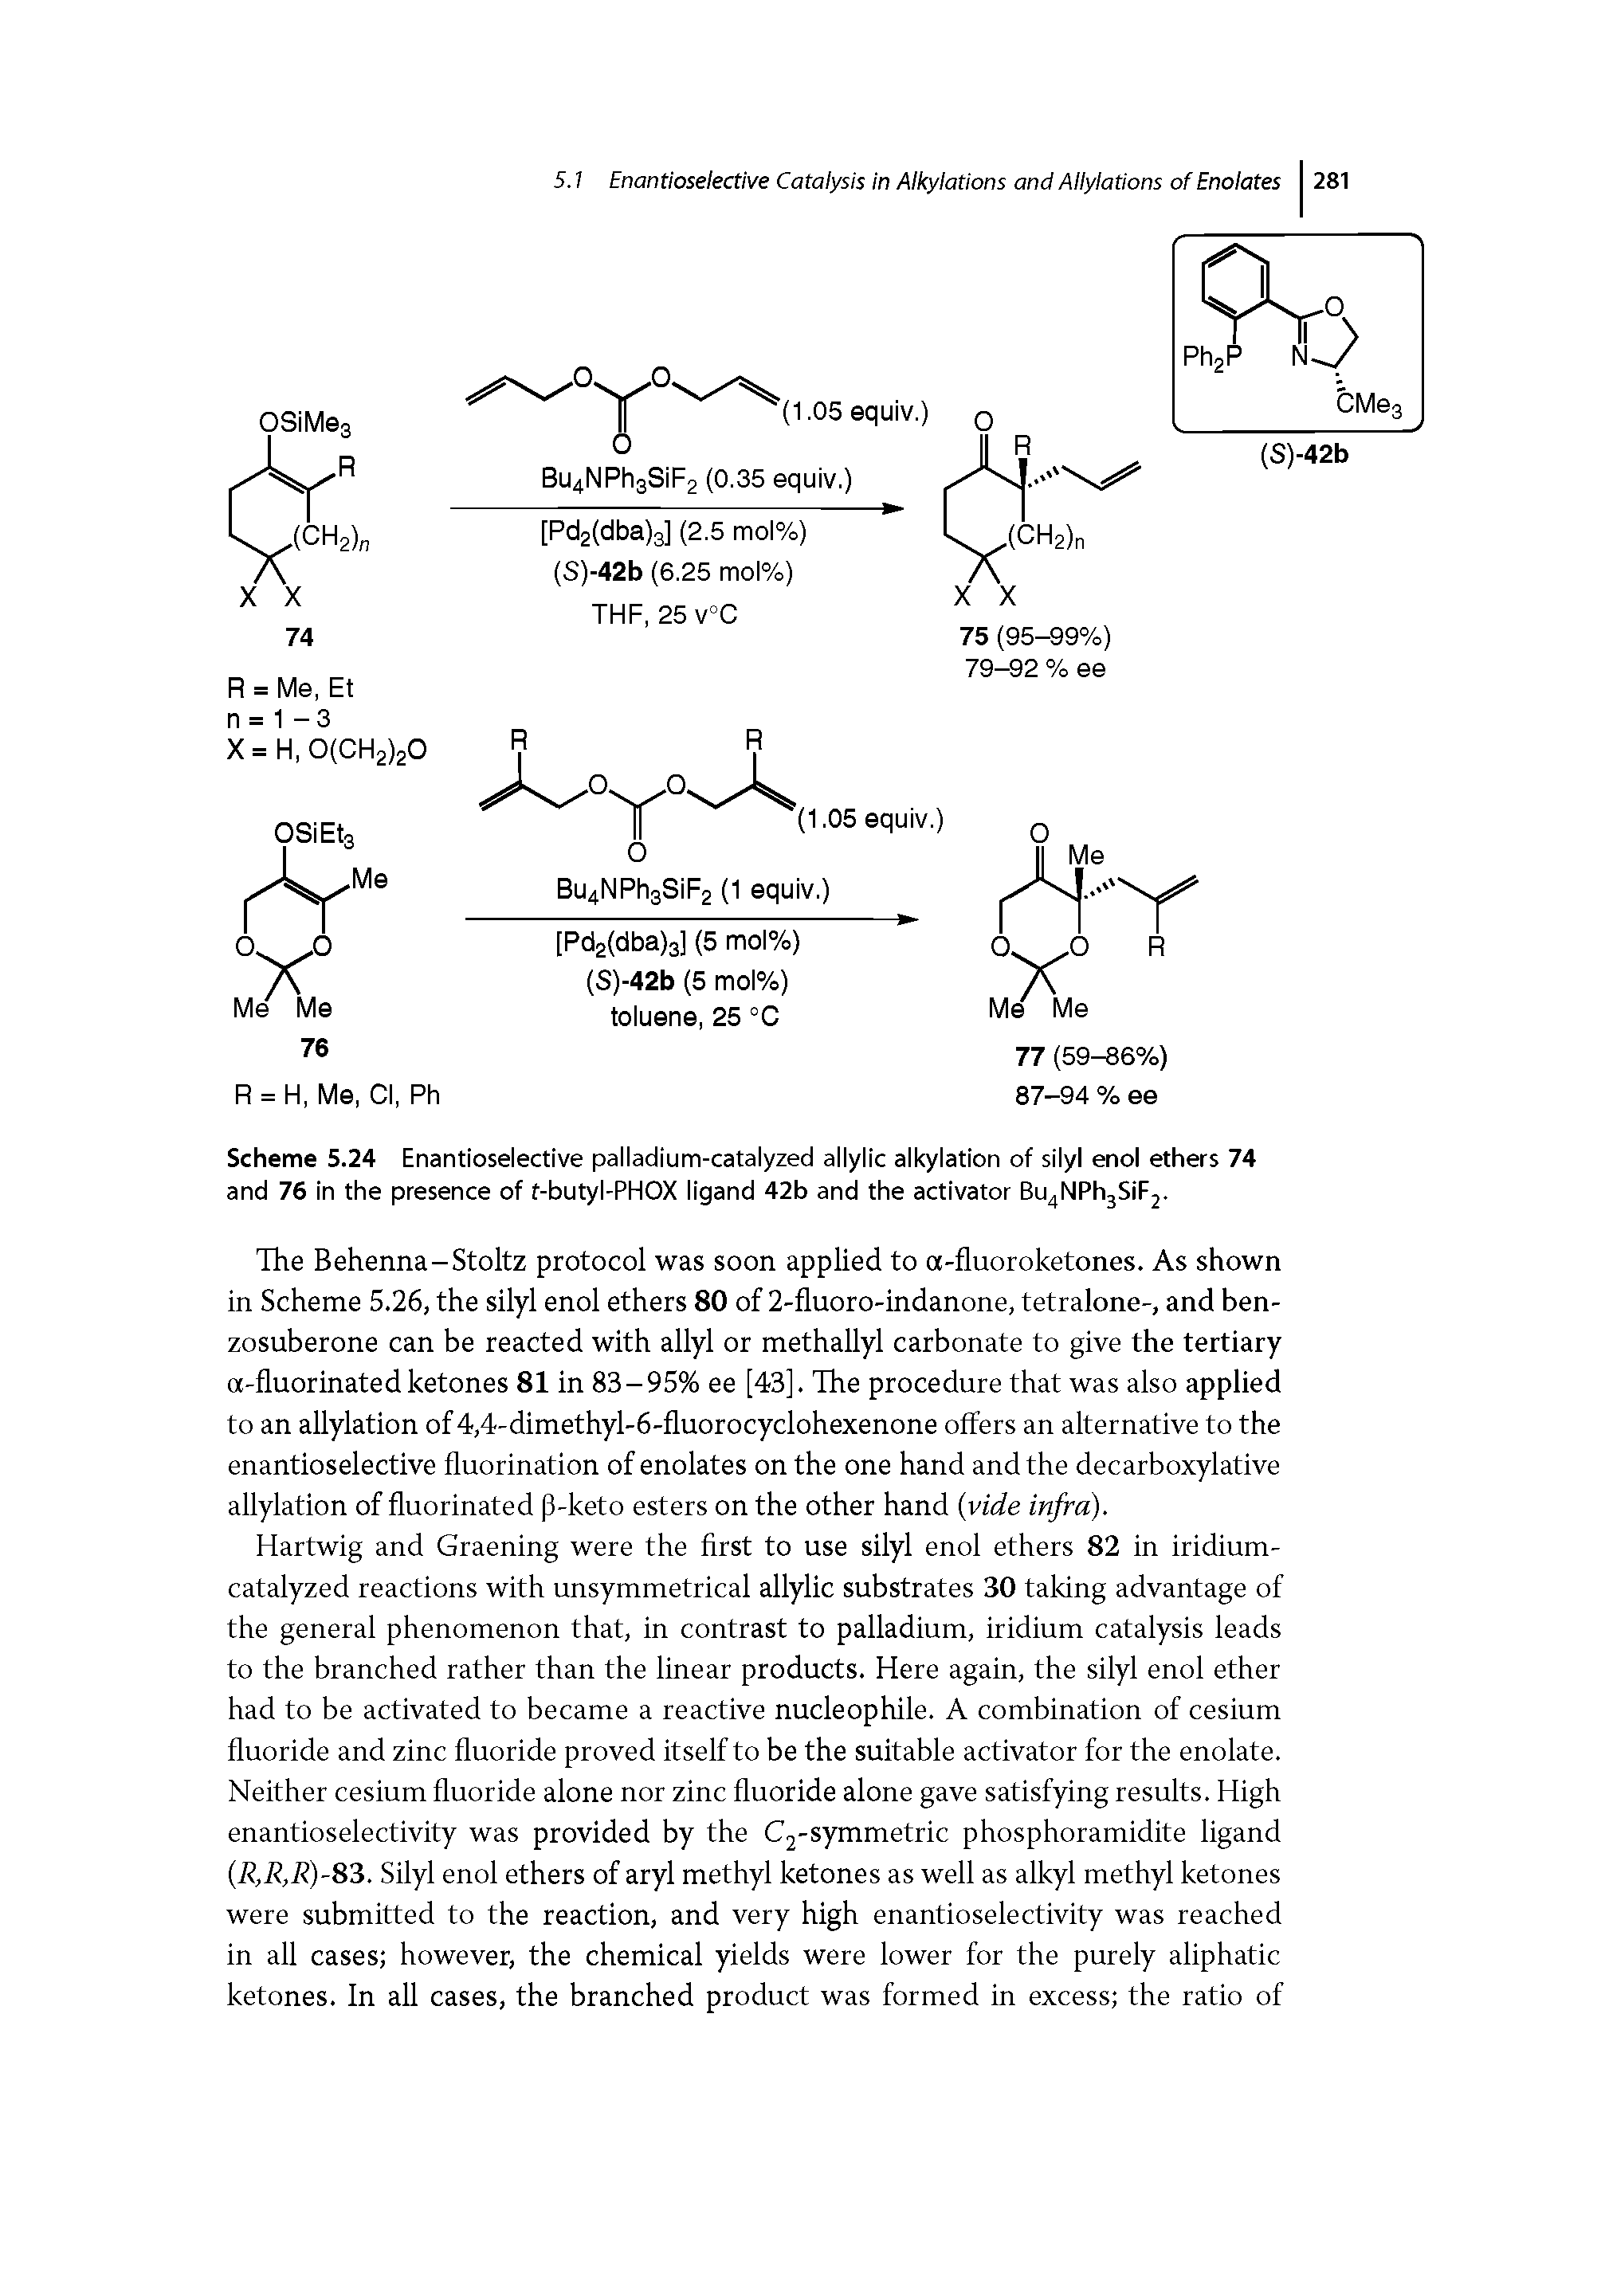 Scheme 5.24 Enantioselective palladium-catalyzed allylic alkylation of silyl enol ethers 74 and 76 in the presence of f-butyl-PHOX ligand 42b and the activator Bu NPhjSiFj.